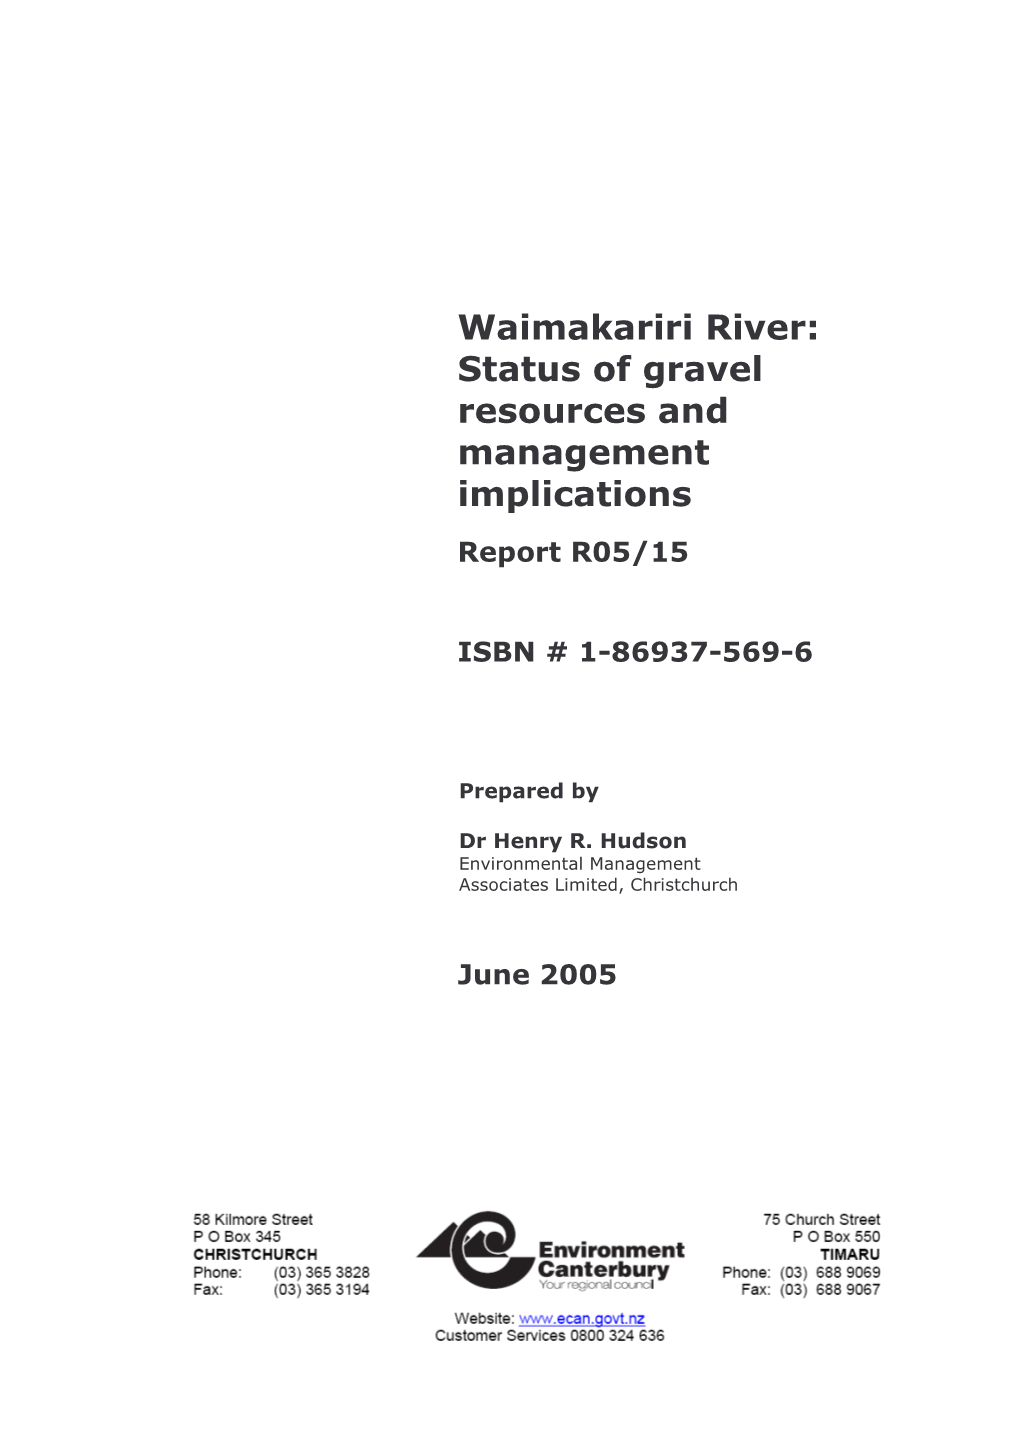 Waimakariri River: Status of Gravel Resources and Management Implications Report R05/15